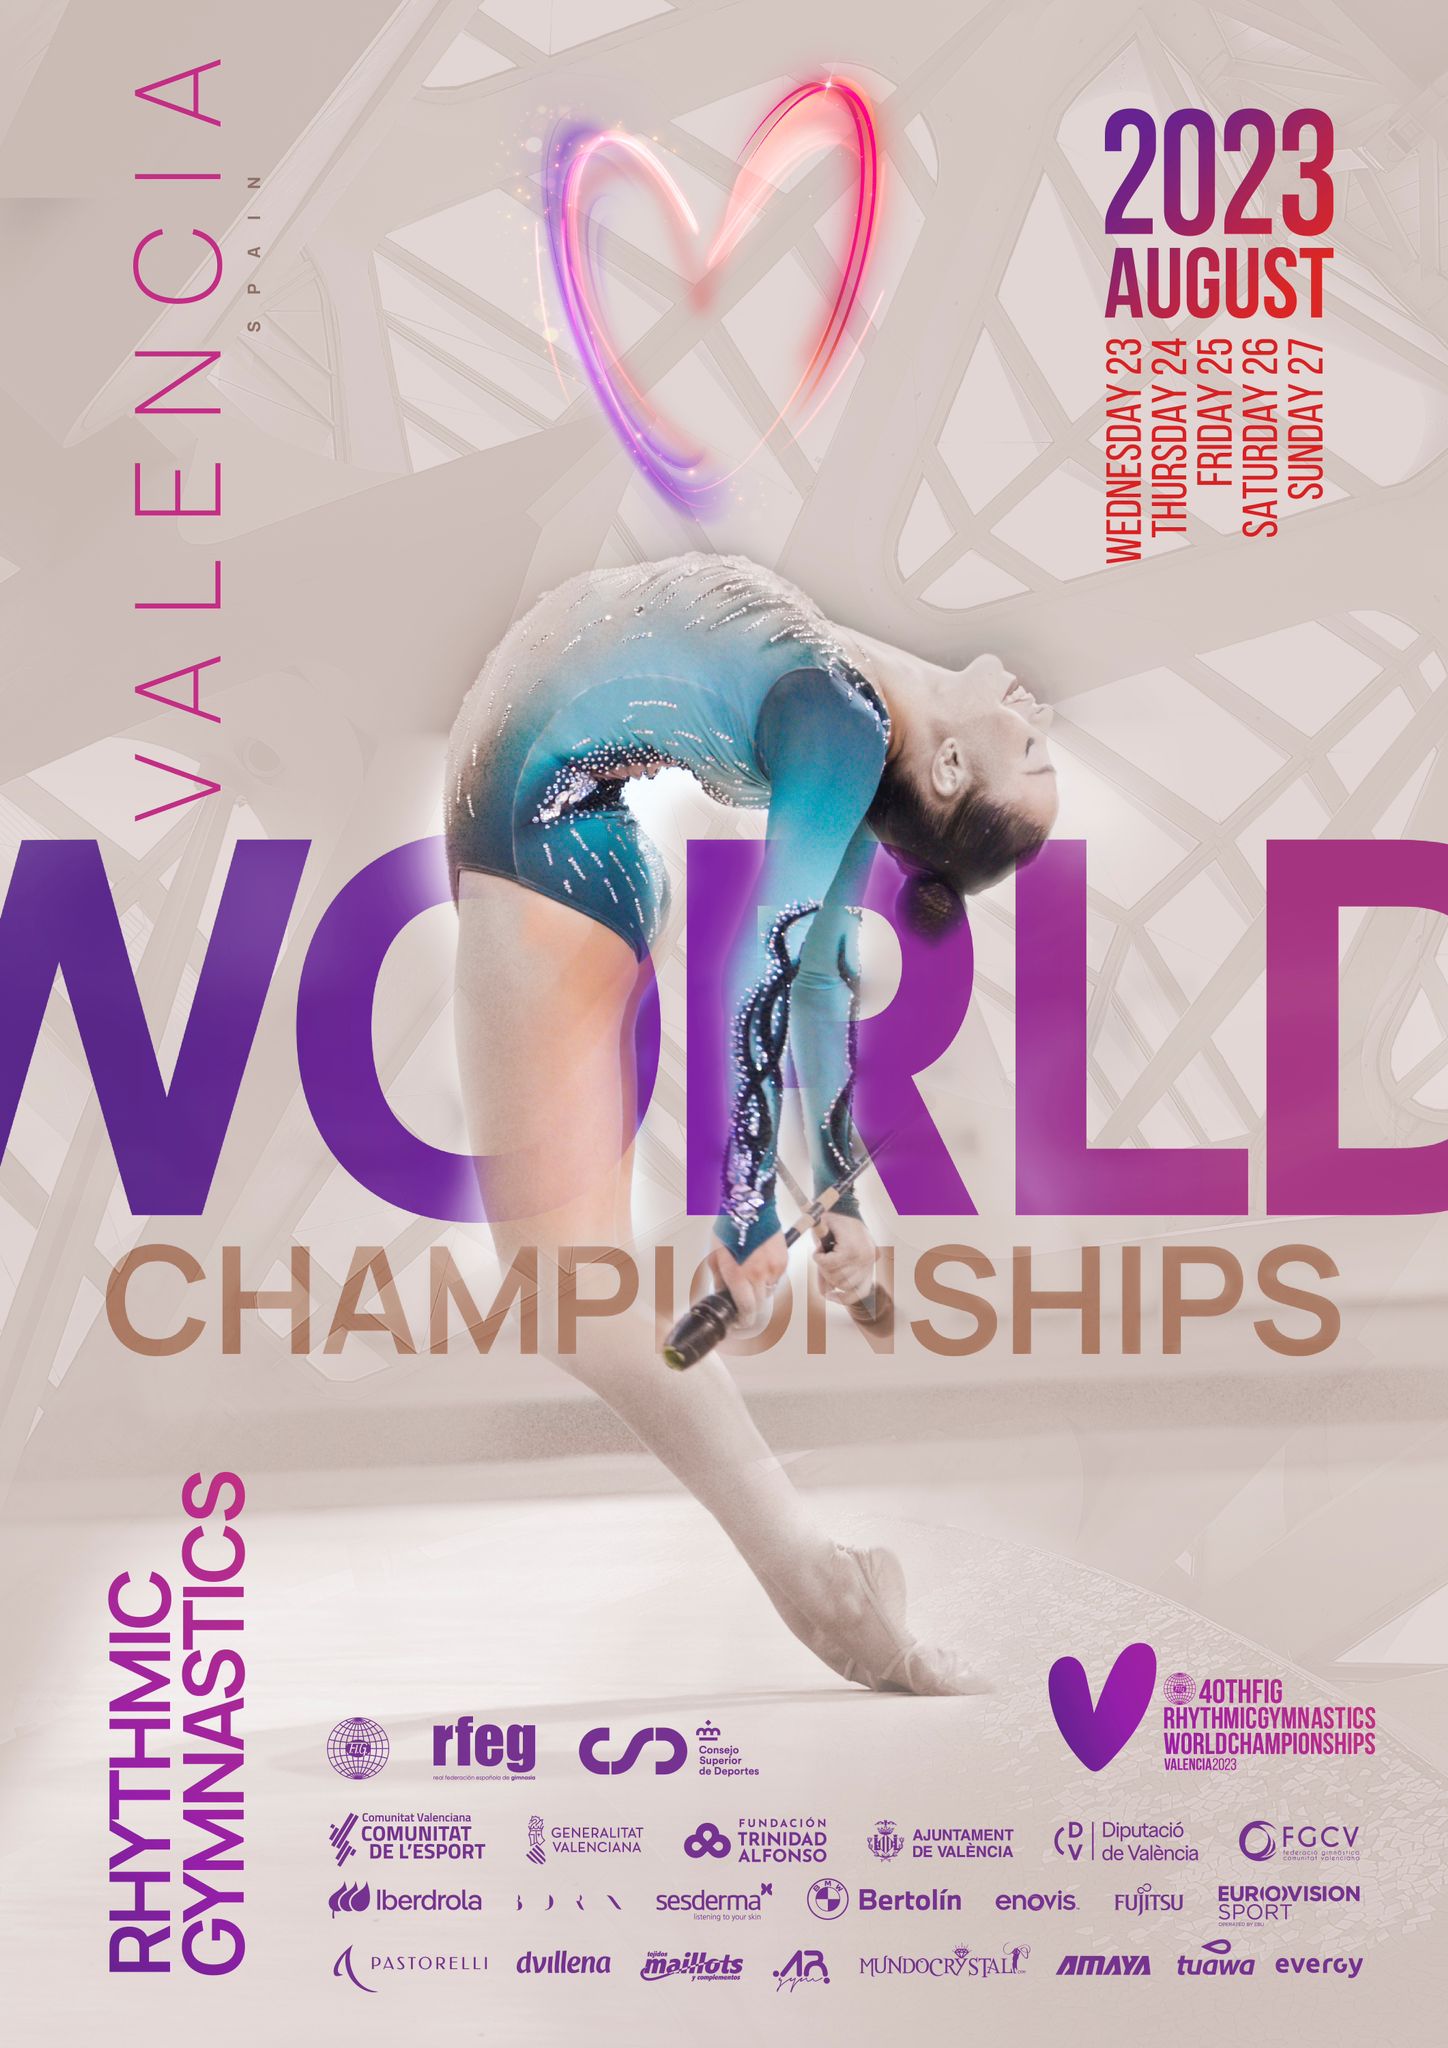 World Championships Valencia 2023 poster